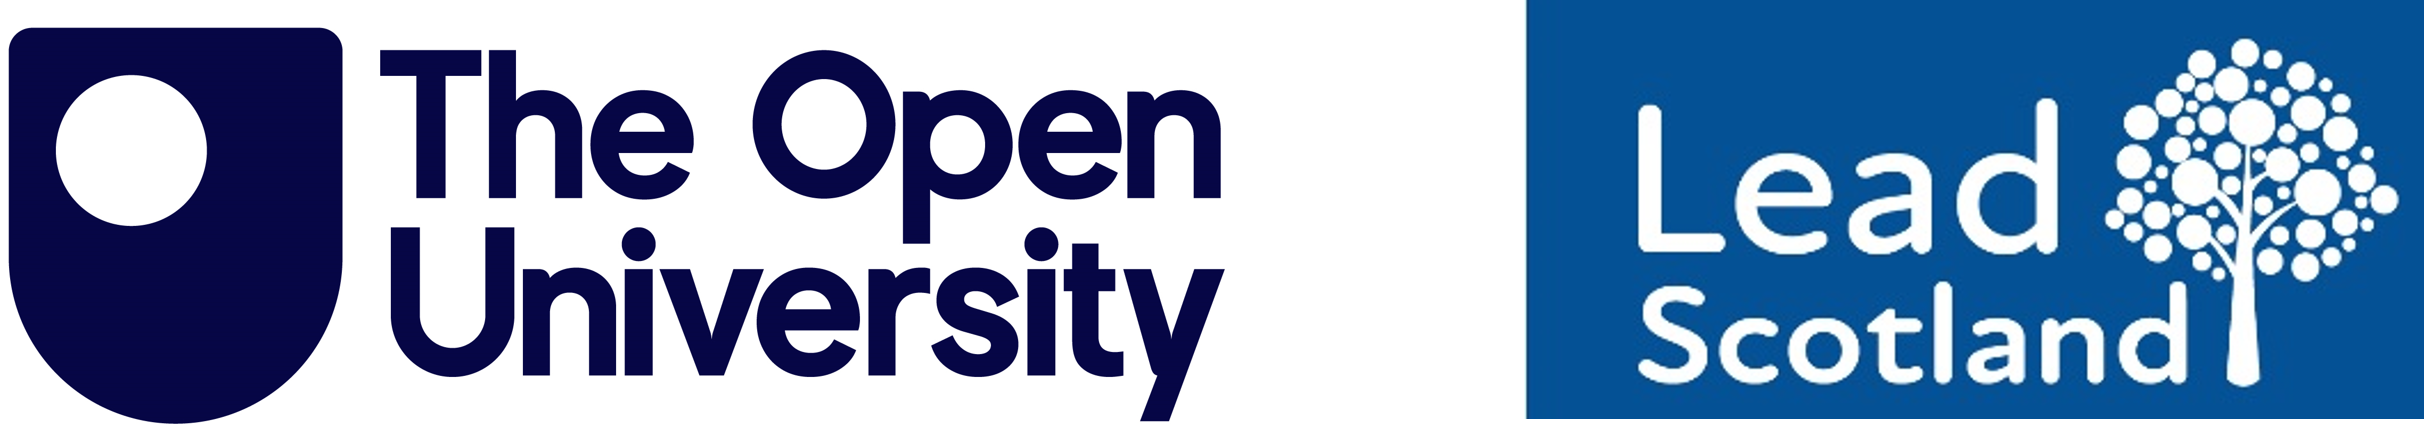 OU logo and Lead Scotland logo